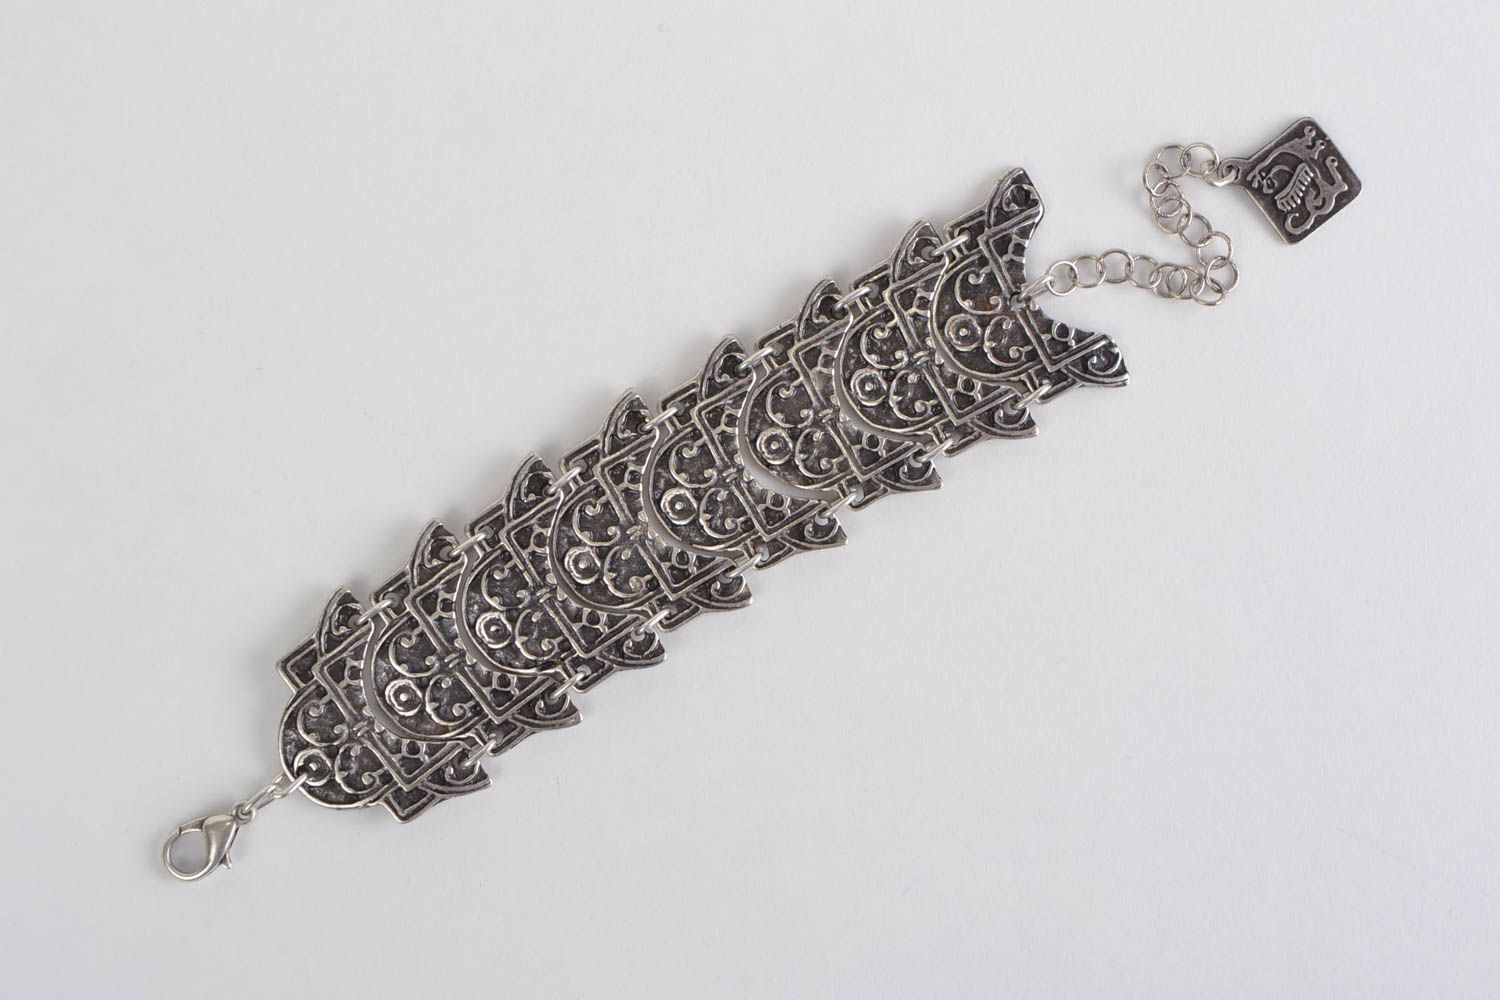 Handmade Metall Armband in Kokillenguss Technik für Frauen mit Kettenglied foto 4